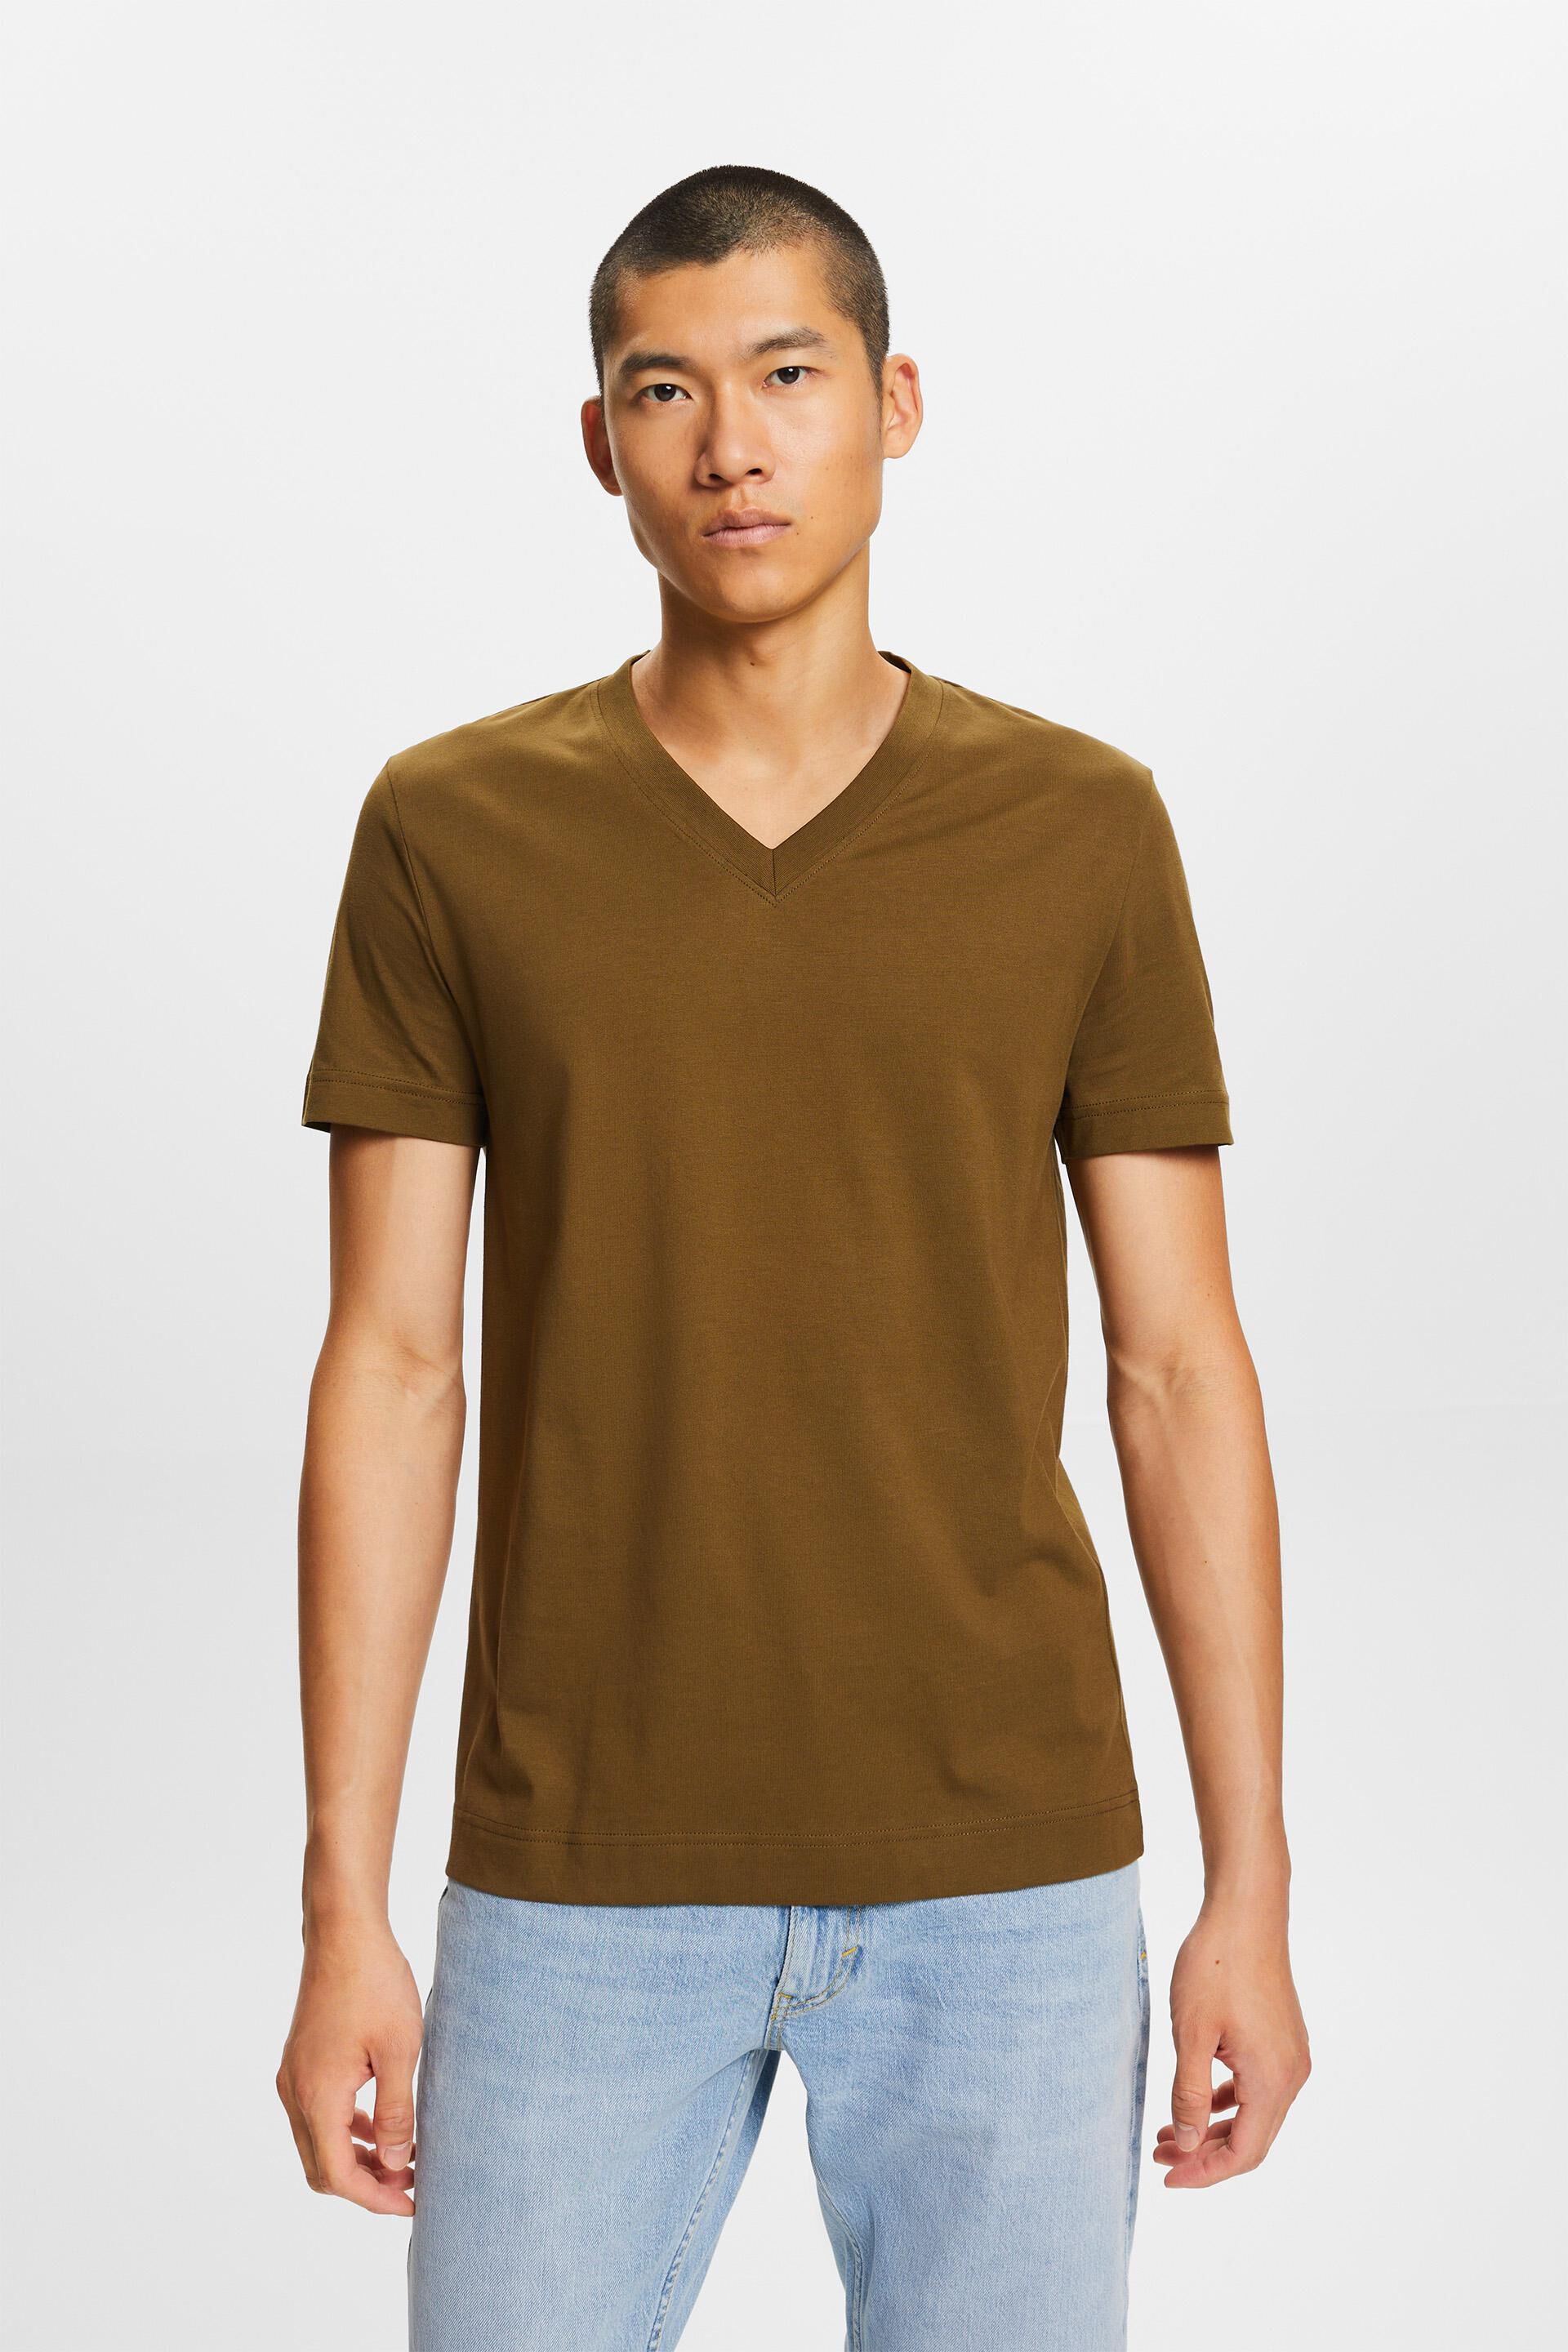 Esprit cotton 100% V-neck t-shirt, Jersey